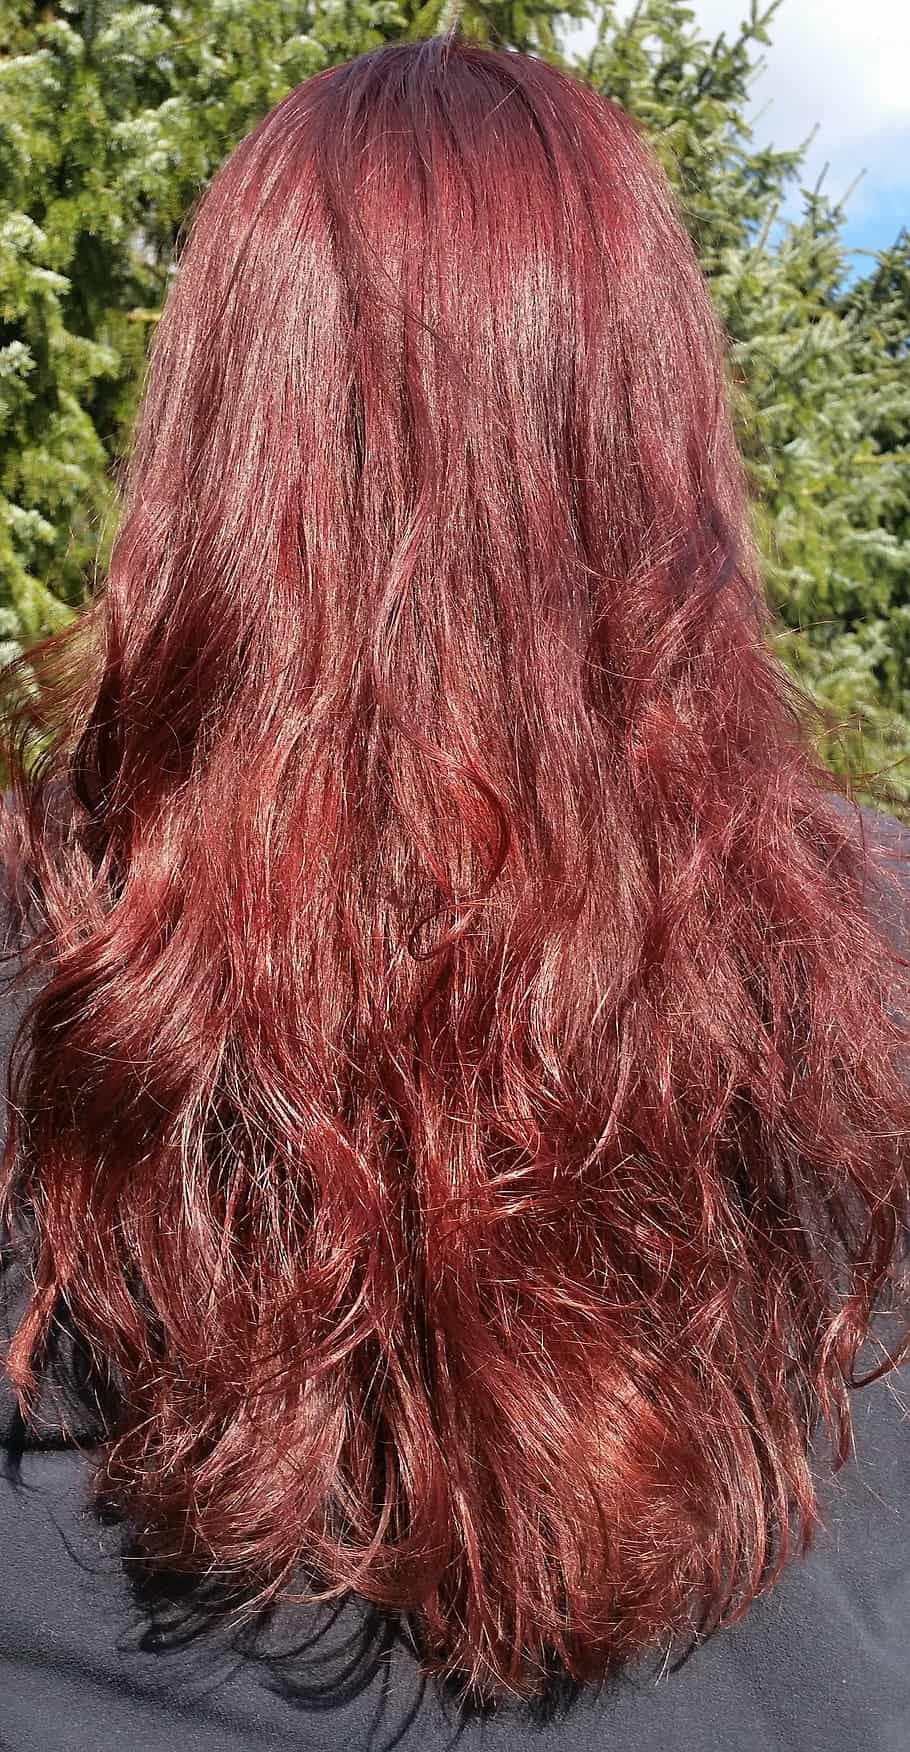 Dark Red Hair Before Washing With Purple Shampoo.